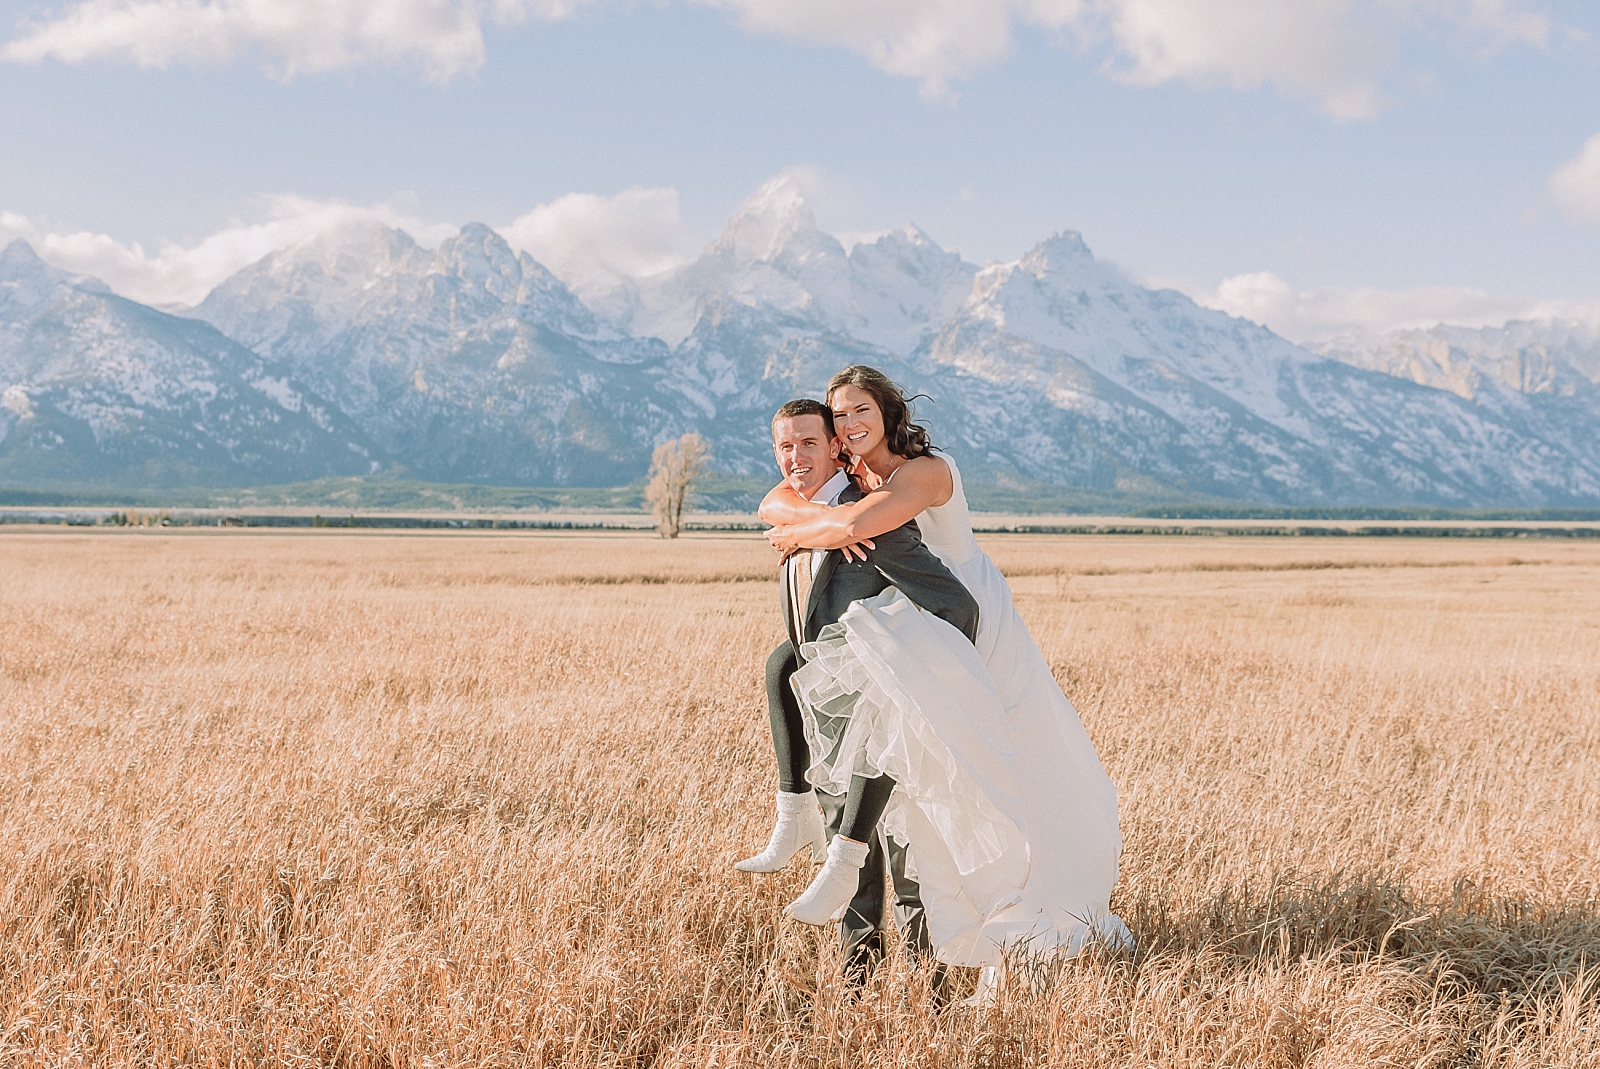 antelope flats wedding photogoraphy at mormon row